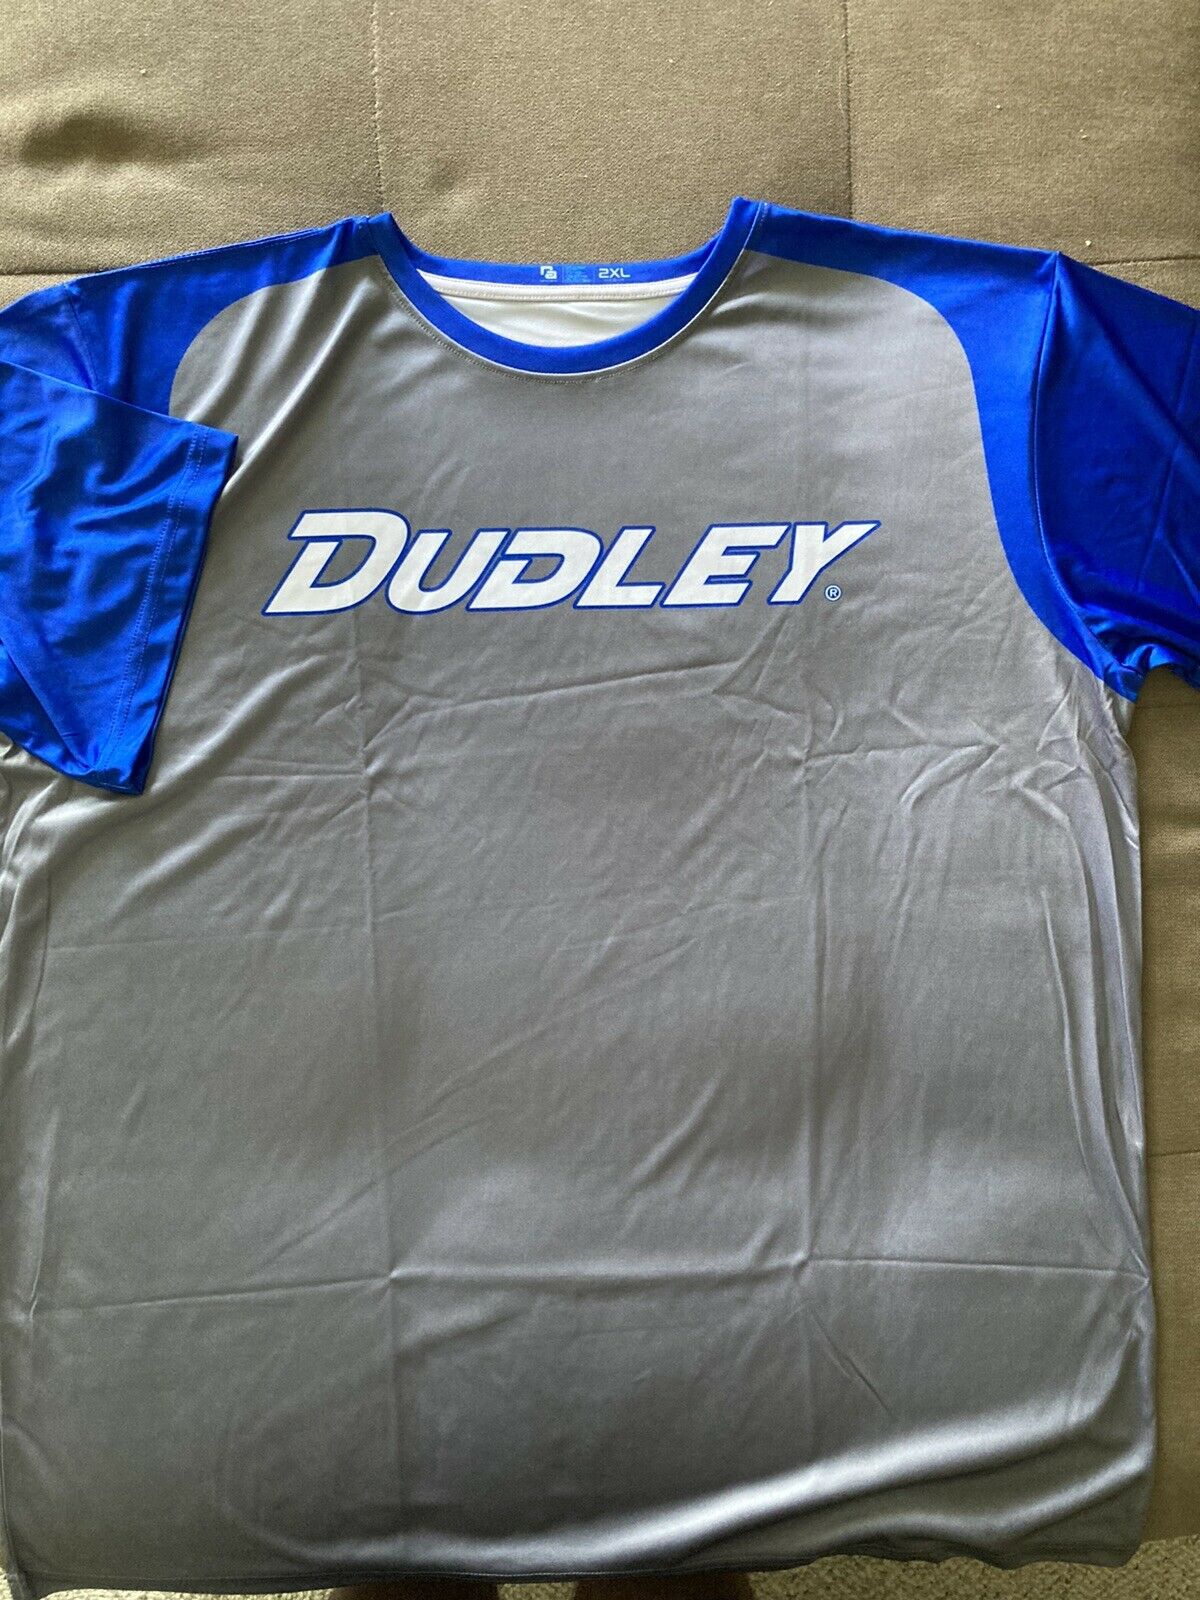 Dudley Softball Serious Jersey Sz Large